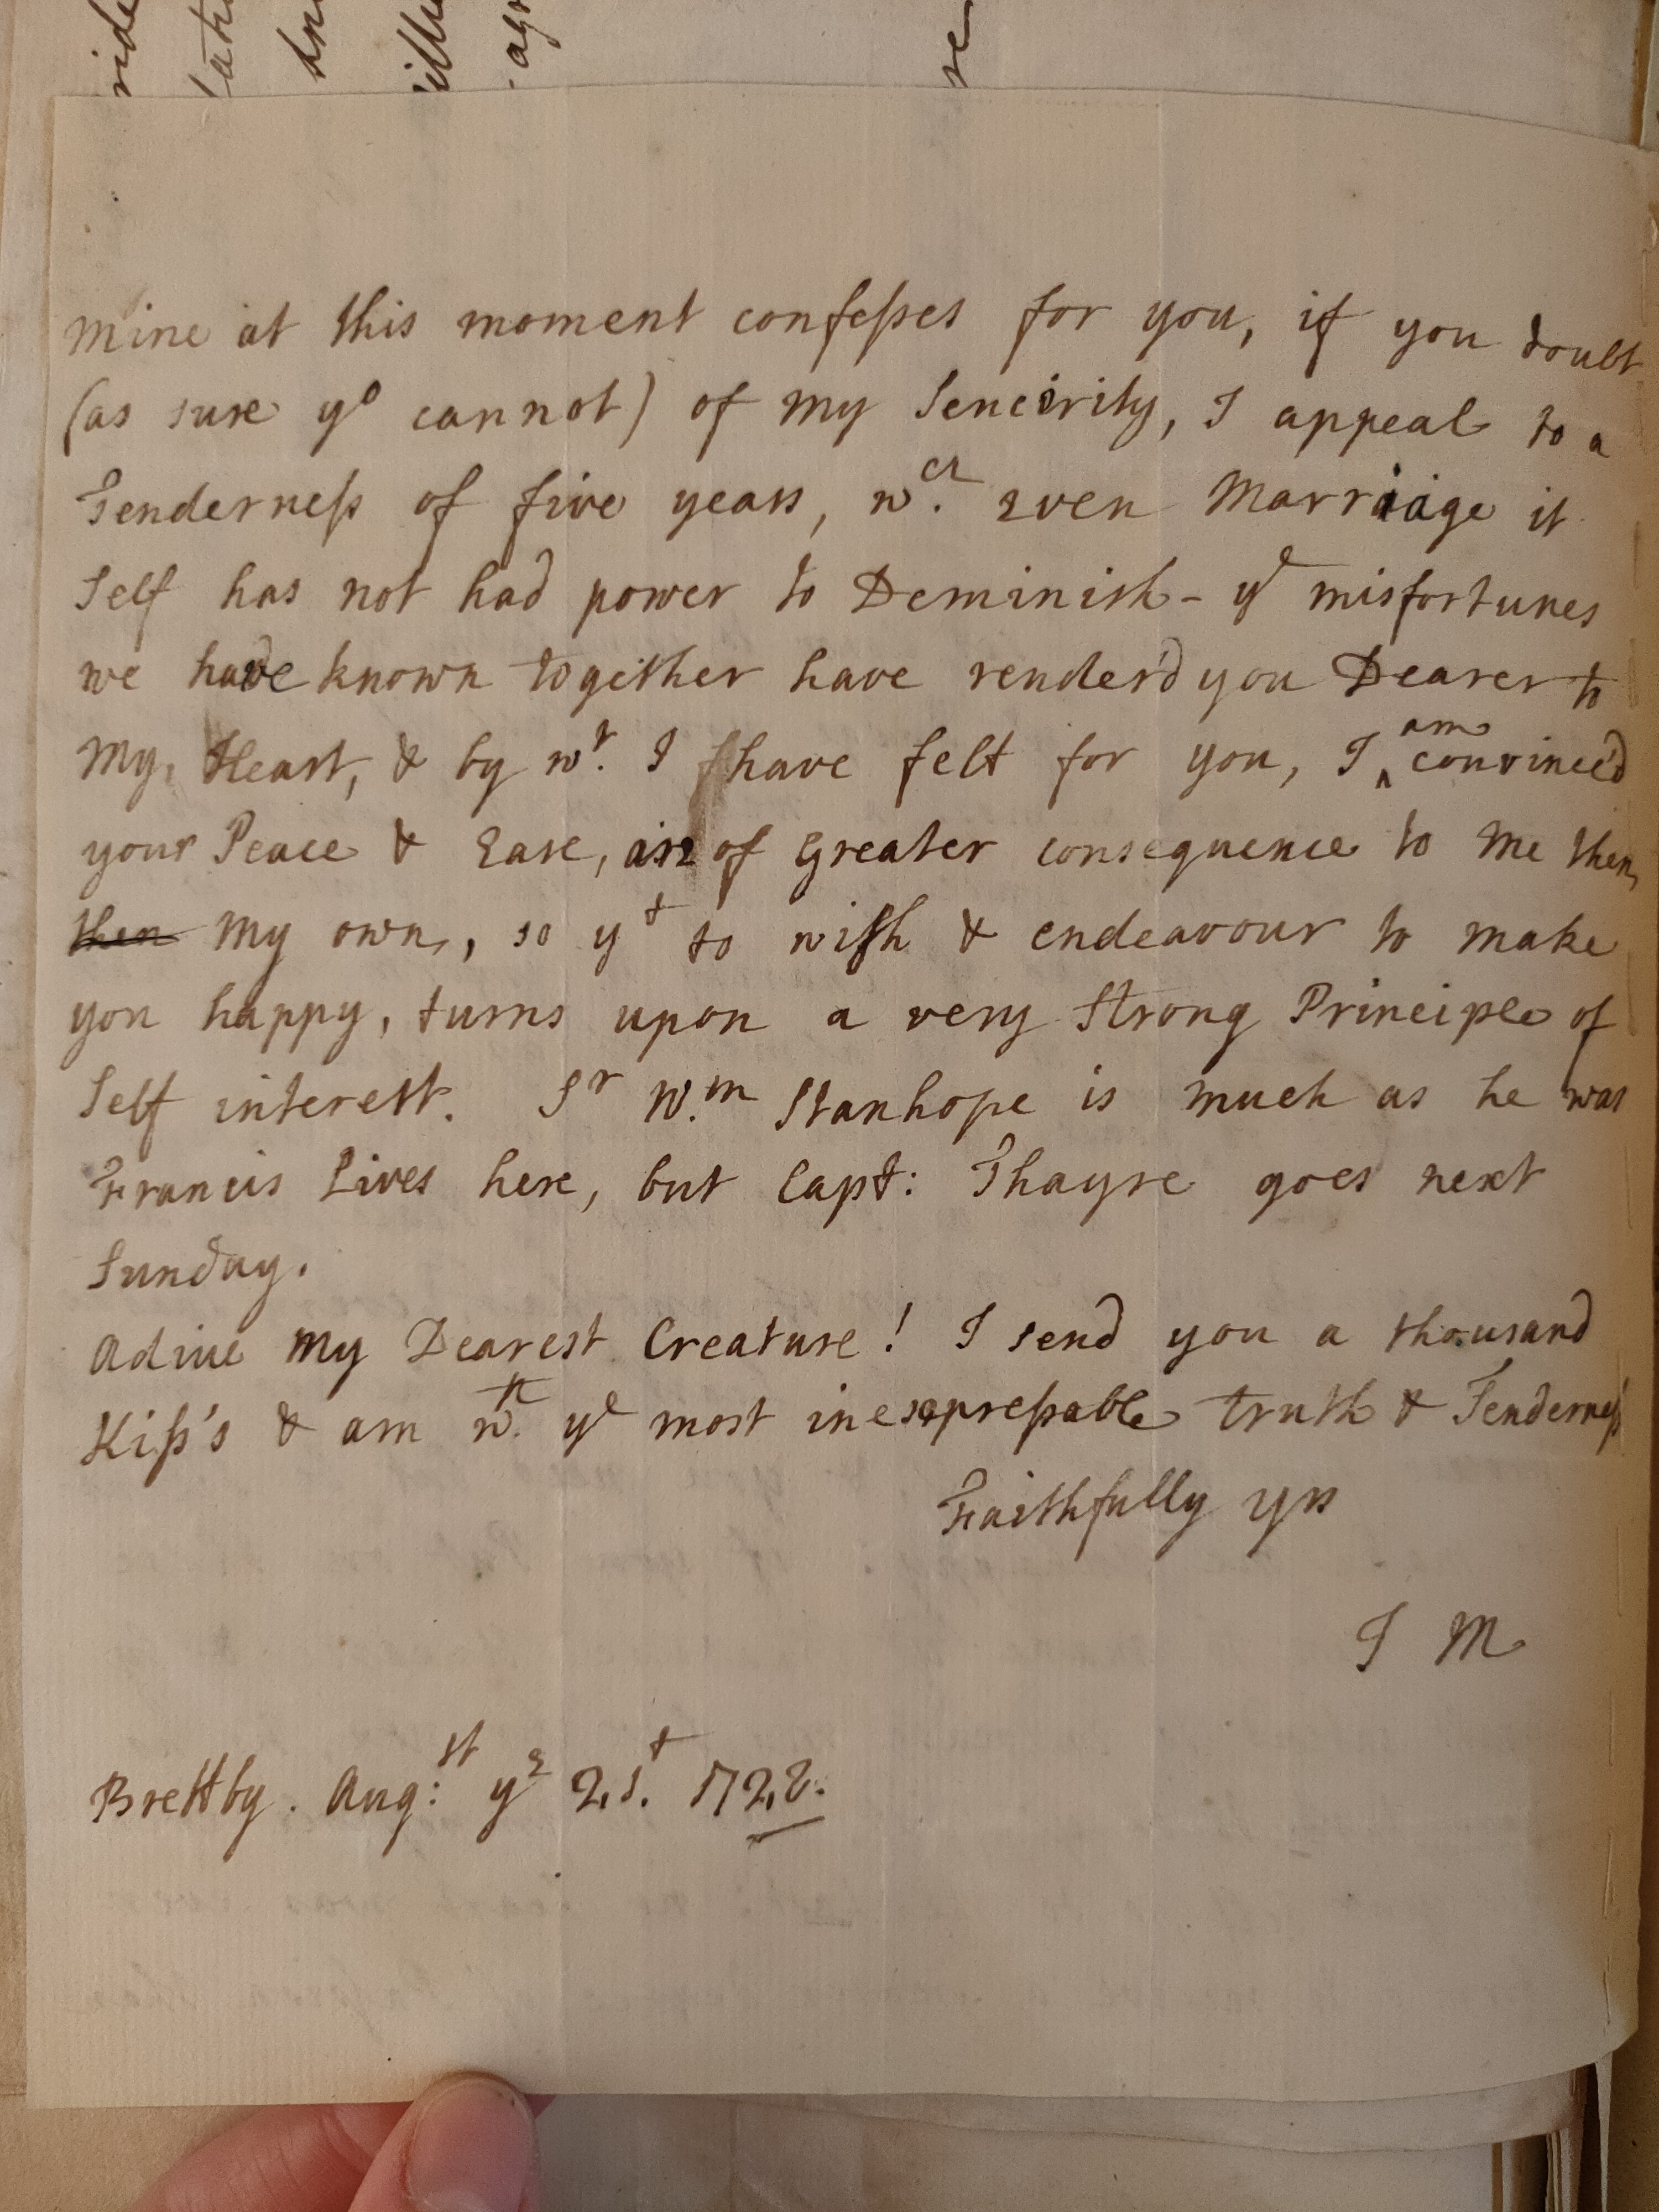 Image #2 of letter: Judith Madan to Martin Madan, 21 August 1728